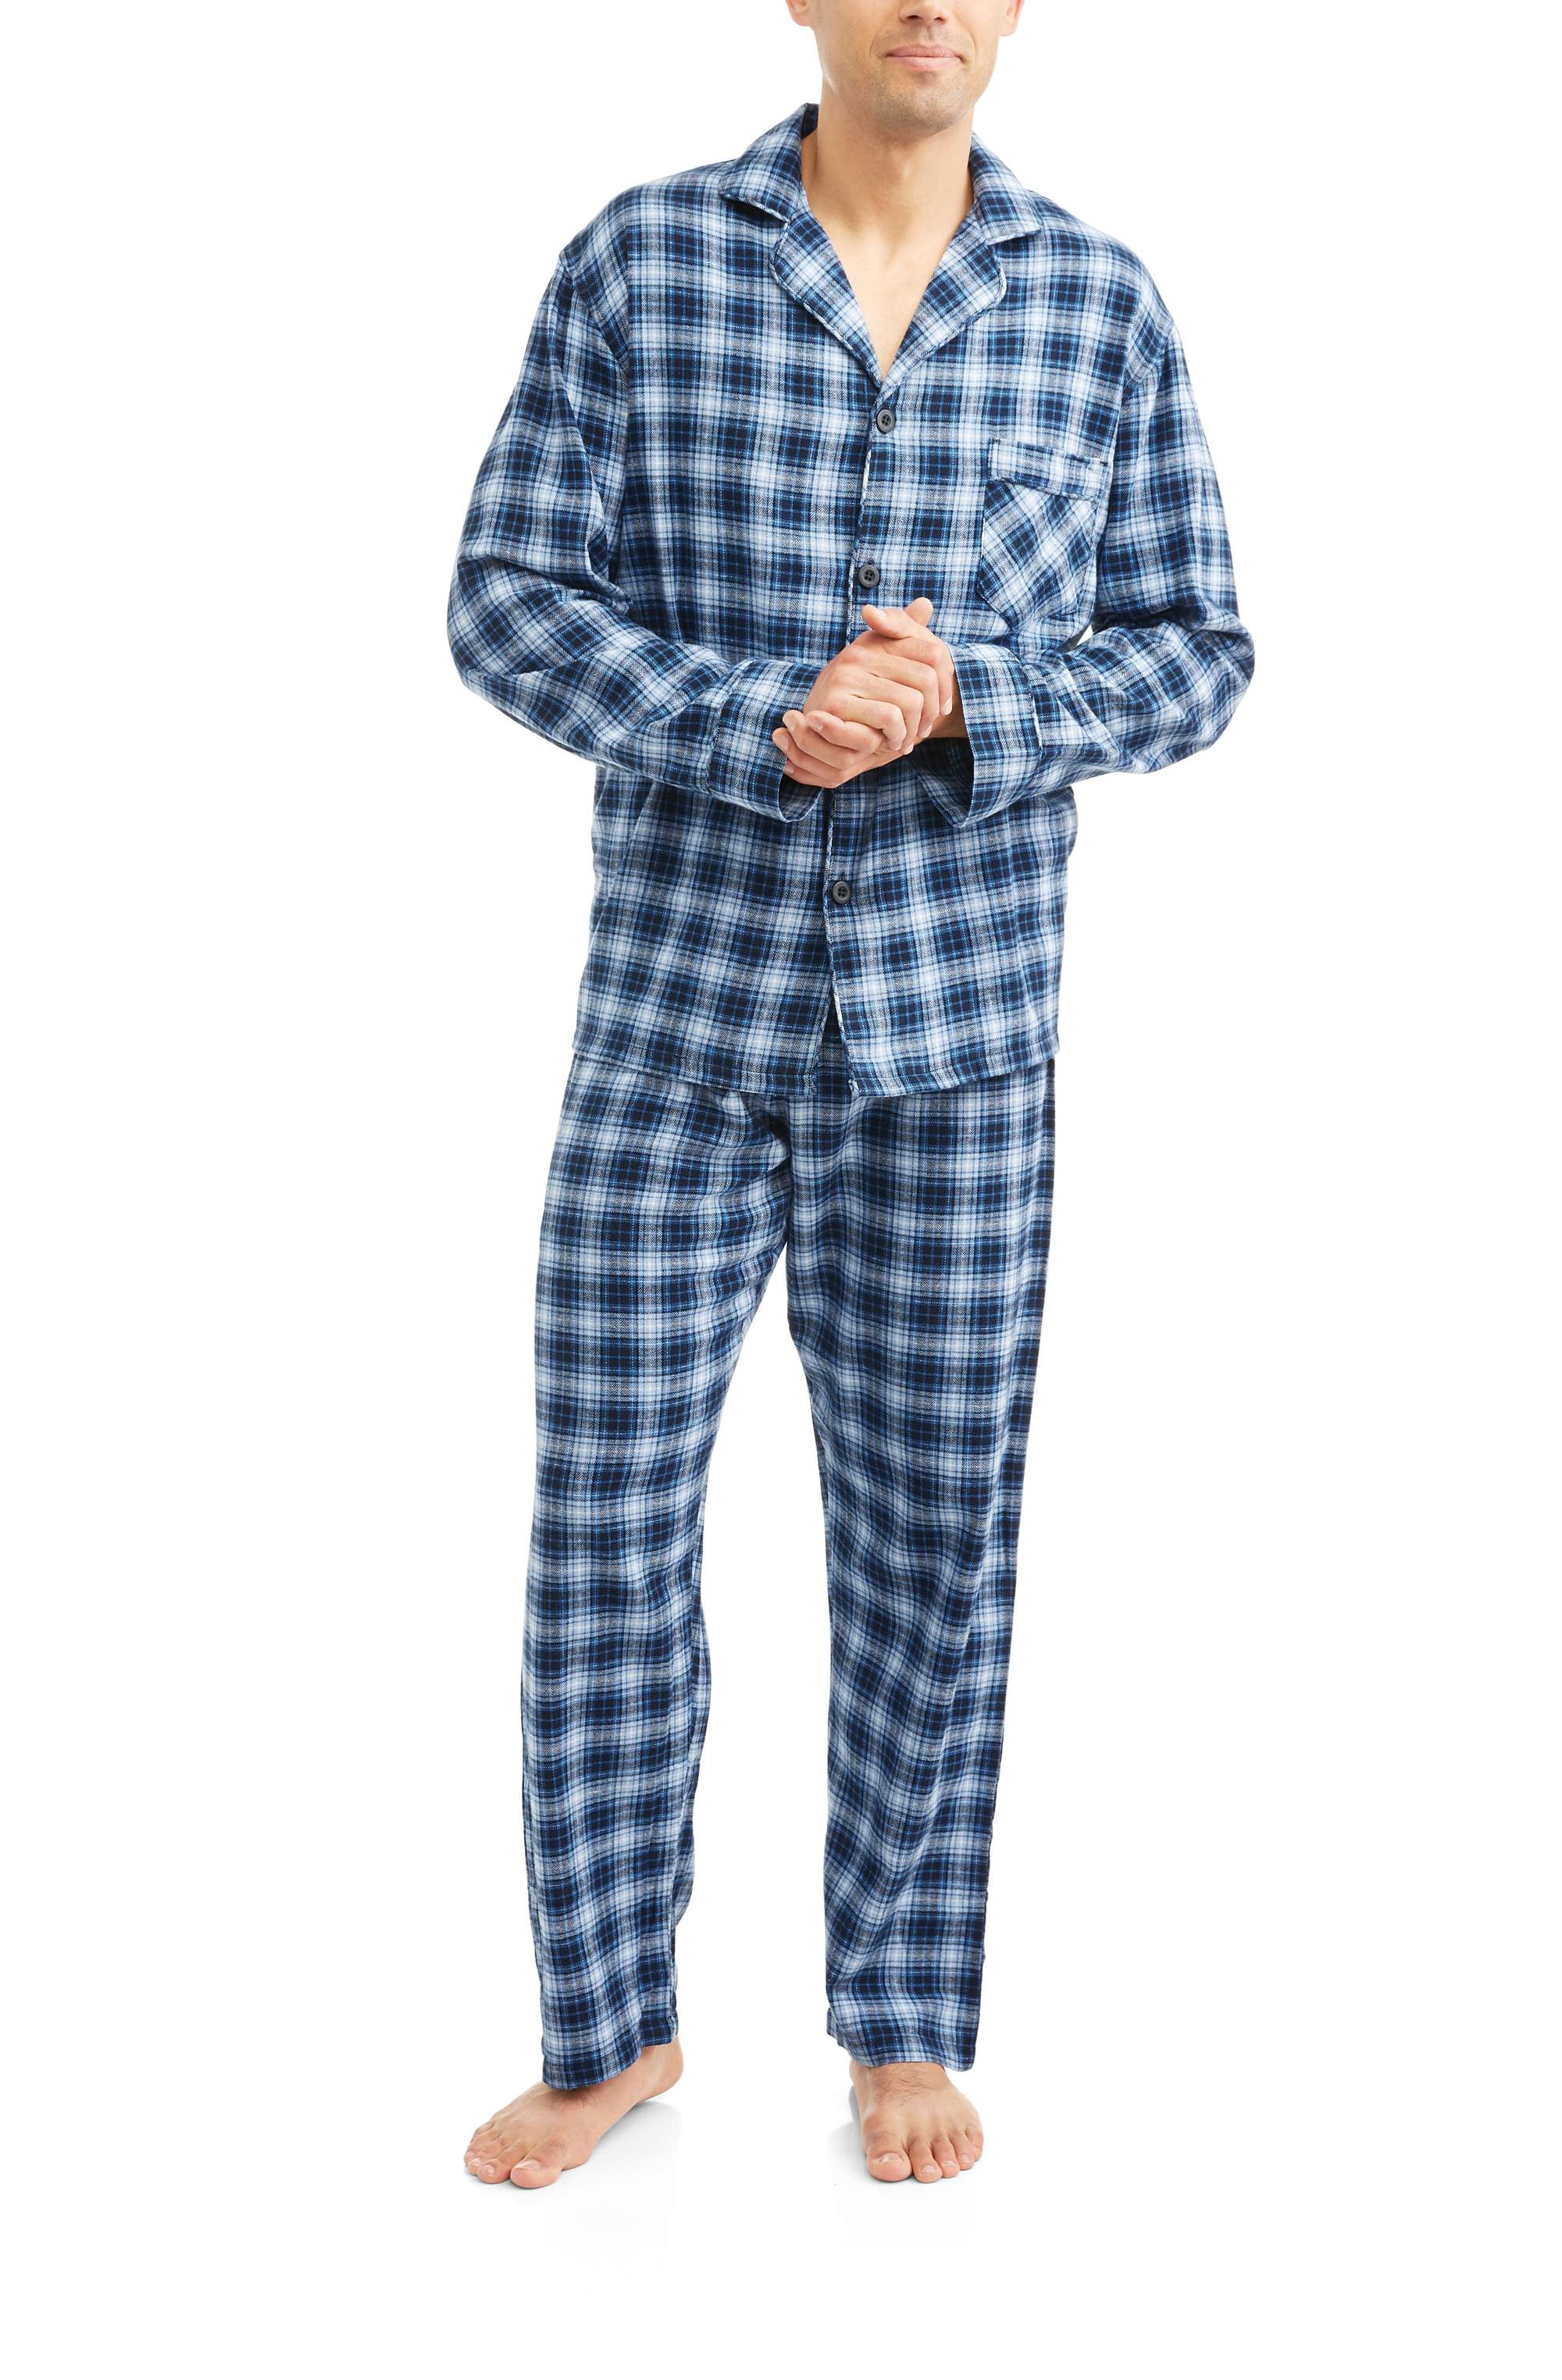 Hanes Mens 2 Piece Navy/Sky Blue Plaid Woven Sleepwear Pajama Set Sleep Set 